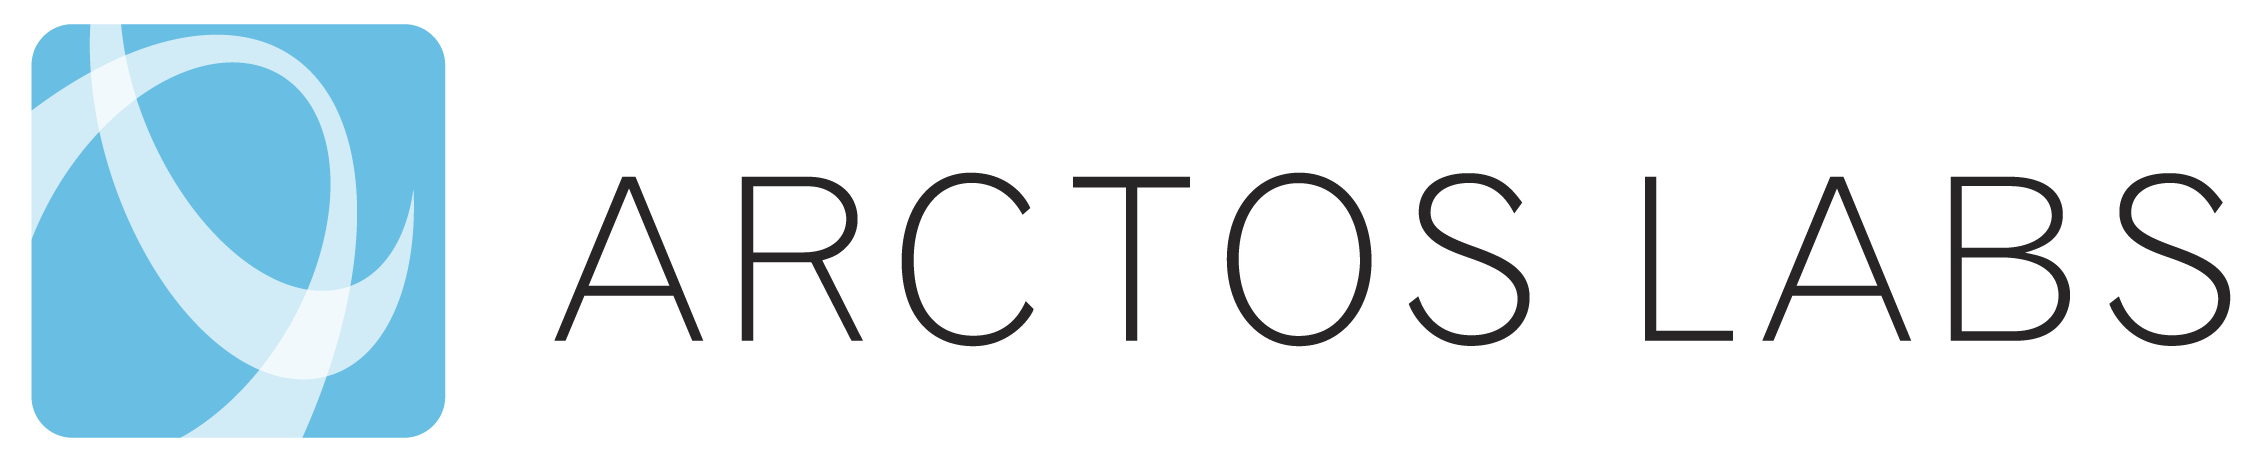 Arctos Labs logotyp